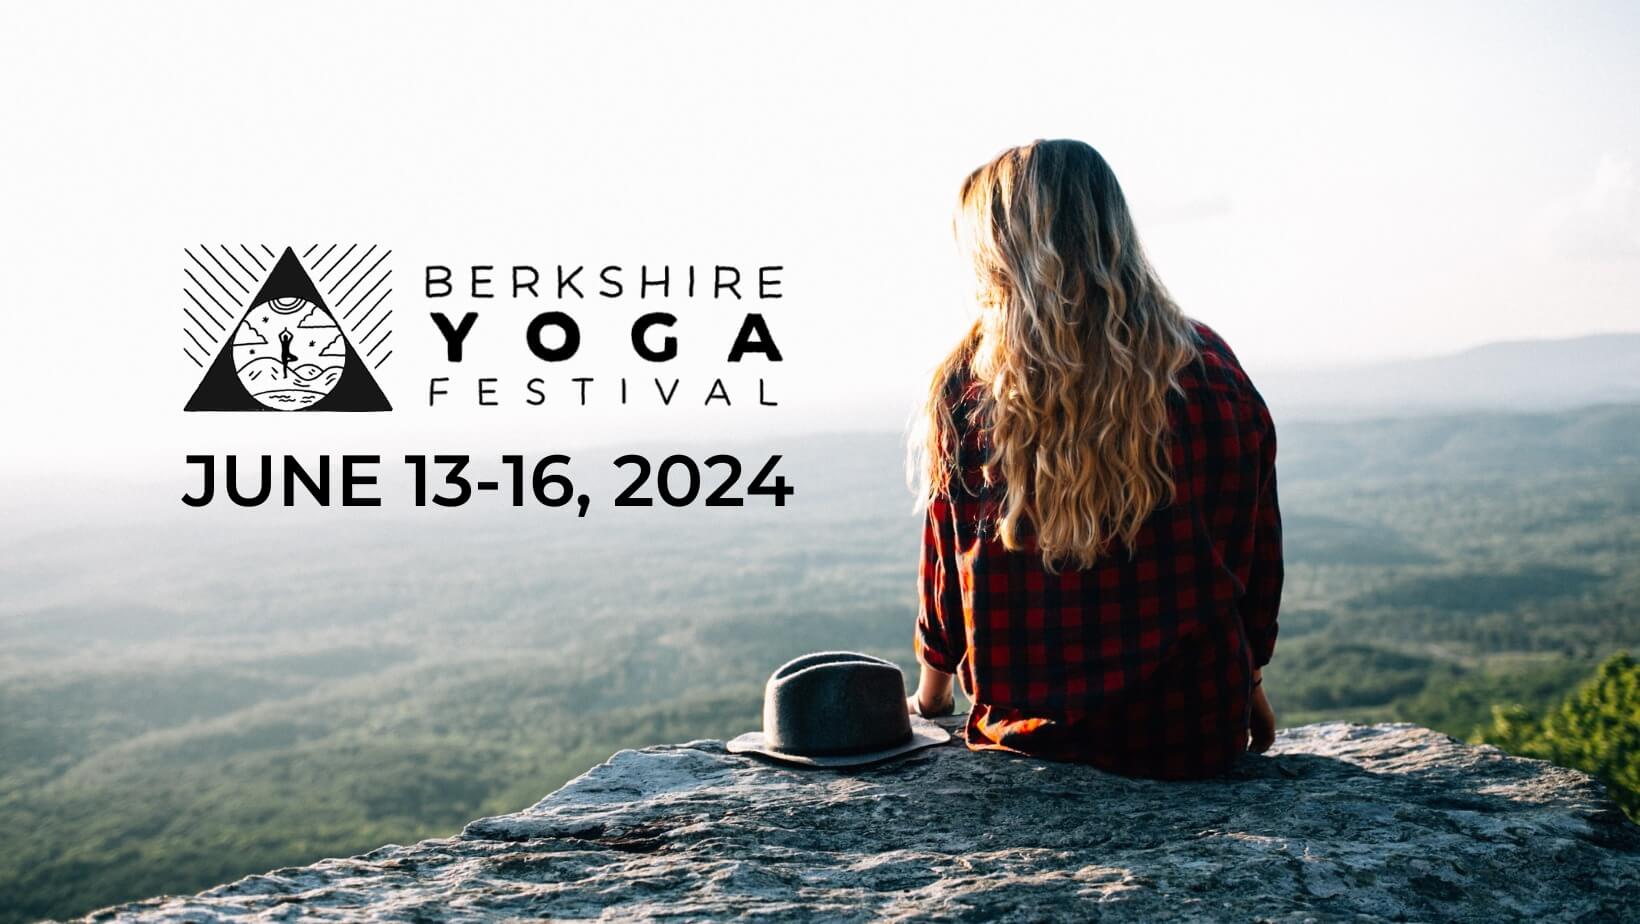 Berkshire Yoga Festival - Visit the Berkshires of Western MA